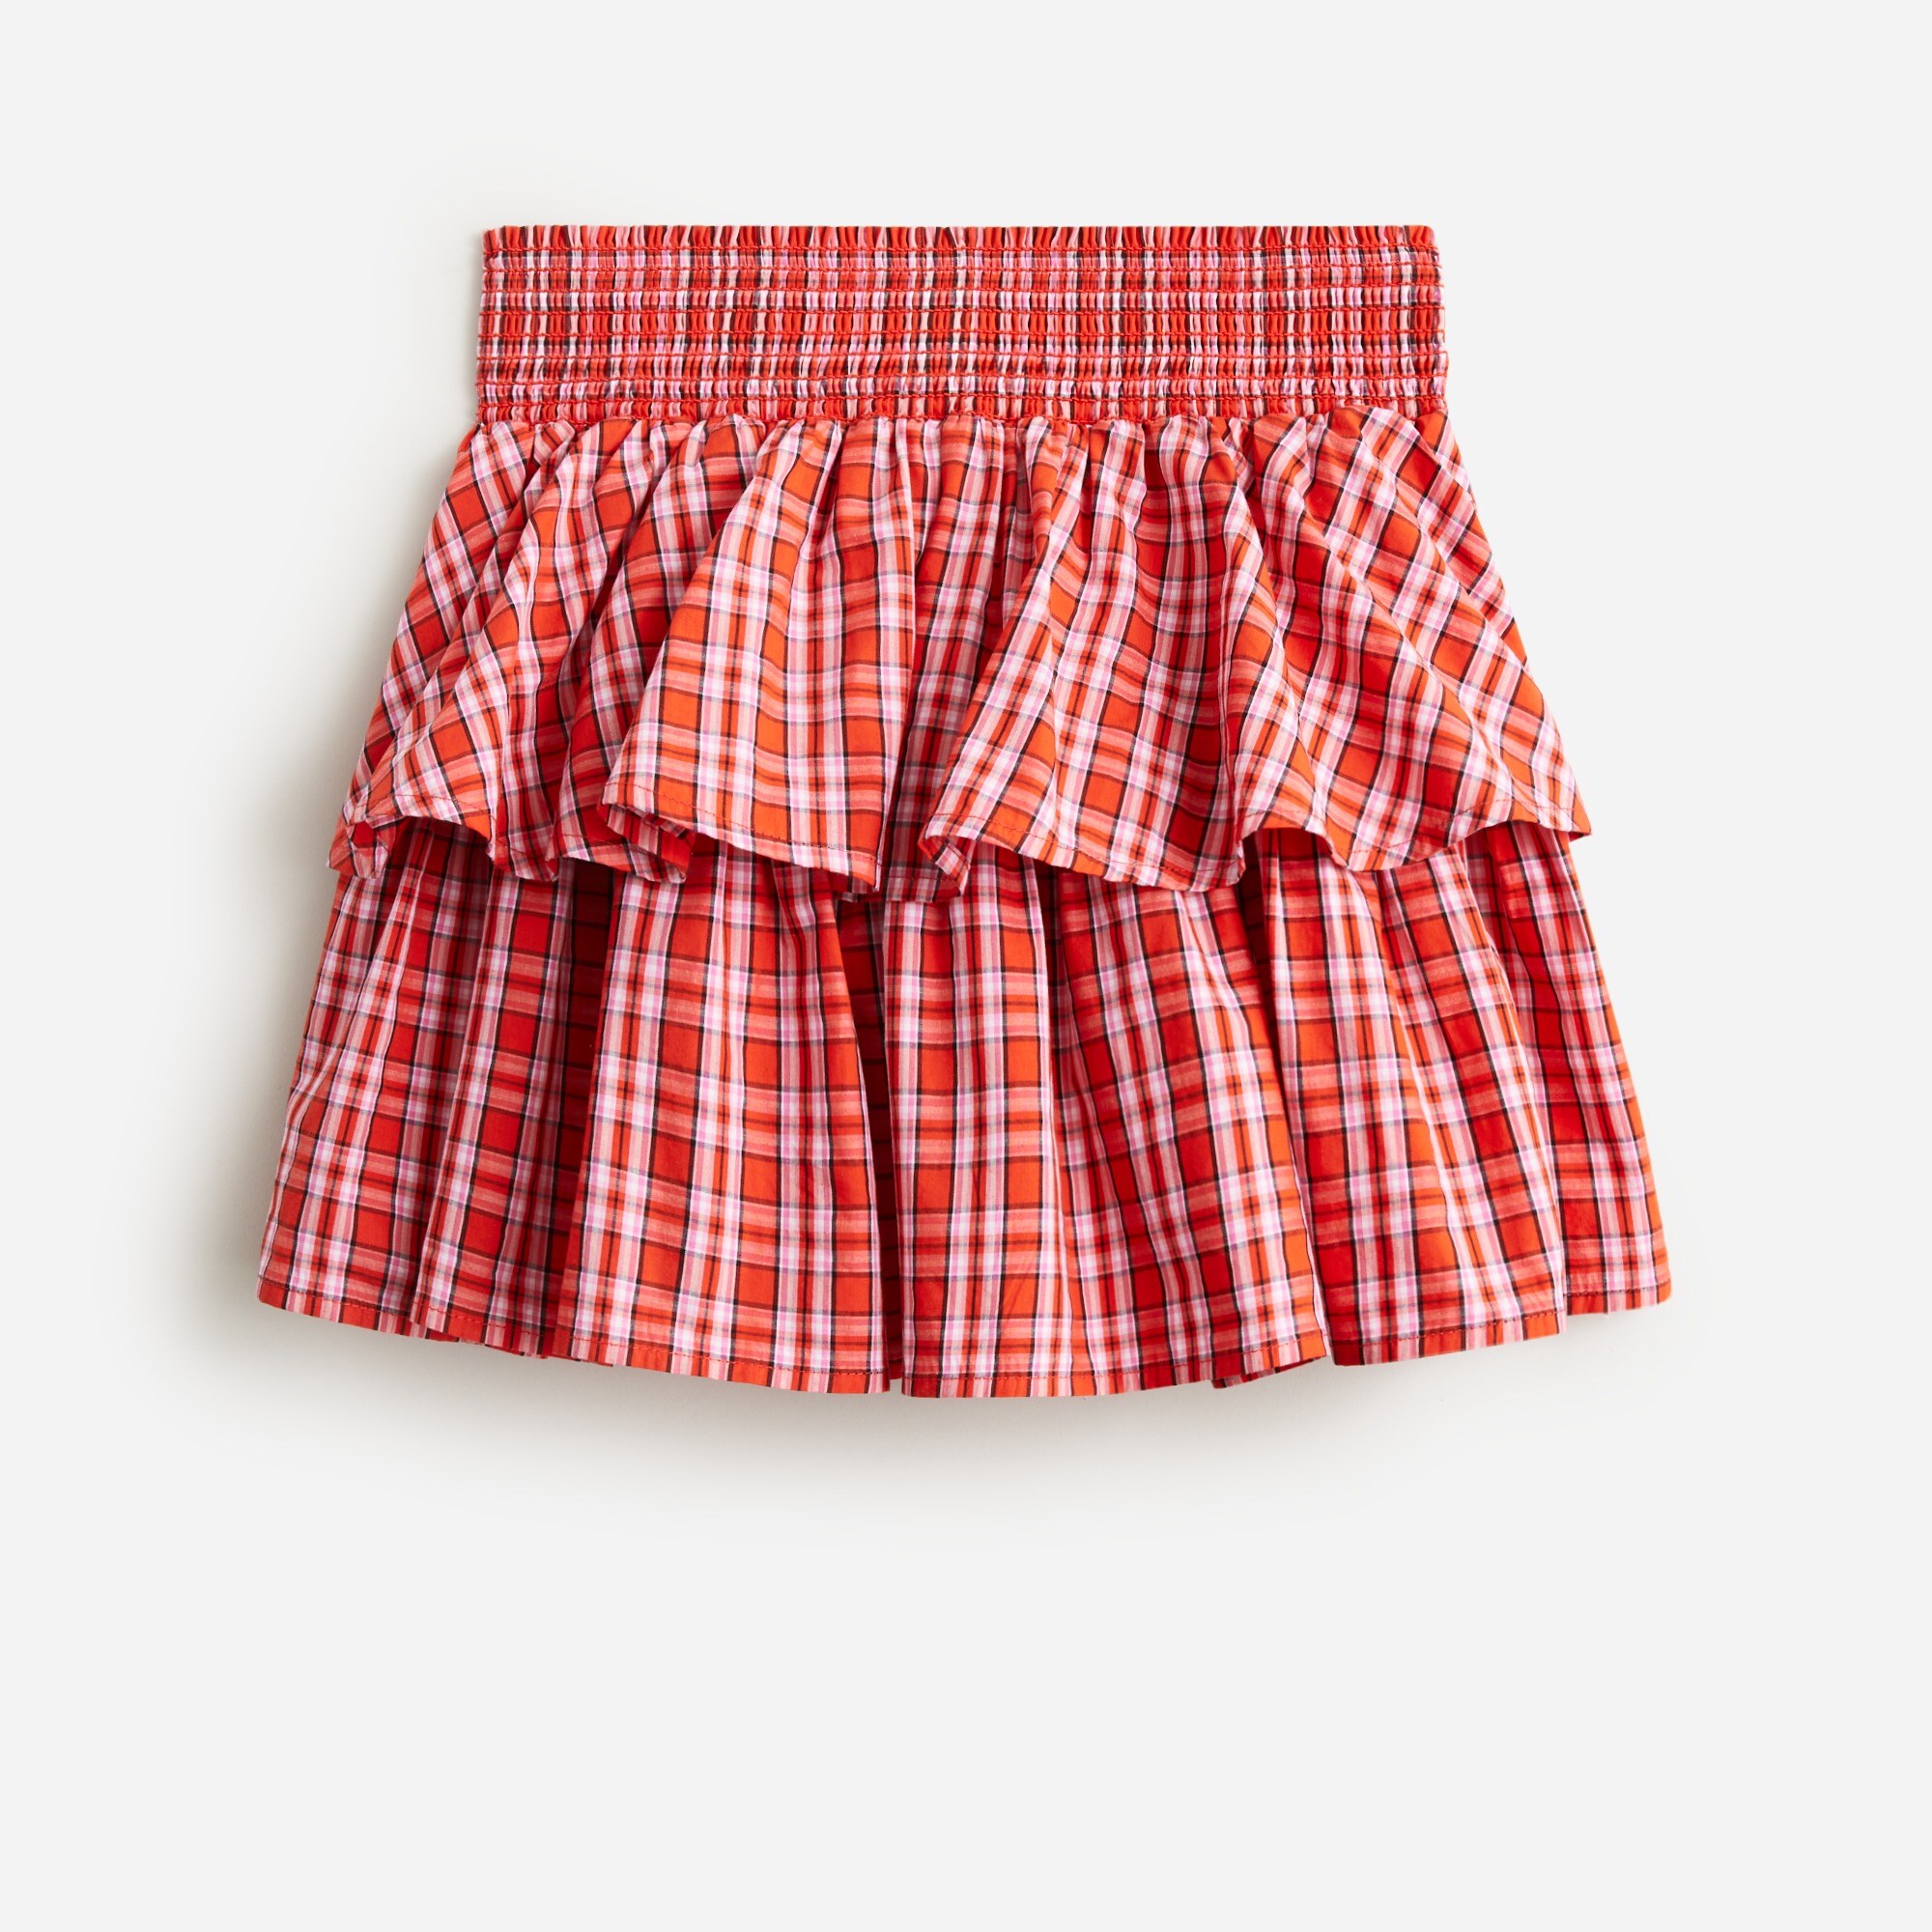  Girls' smocked skirt in tiny tartan